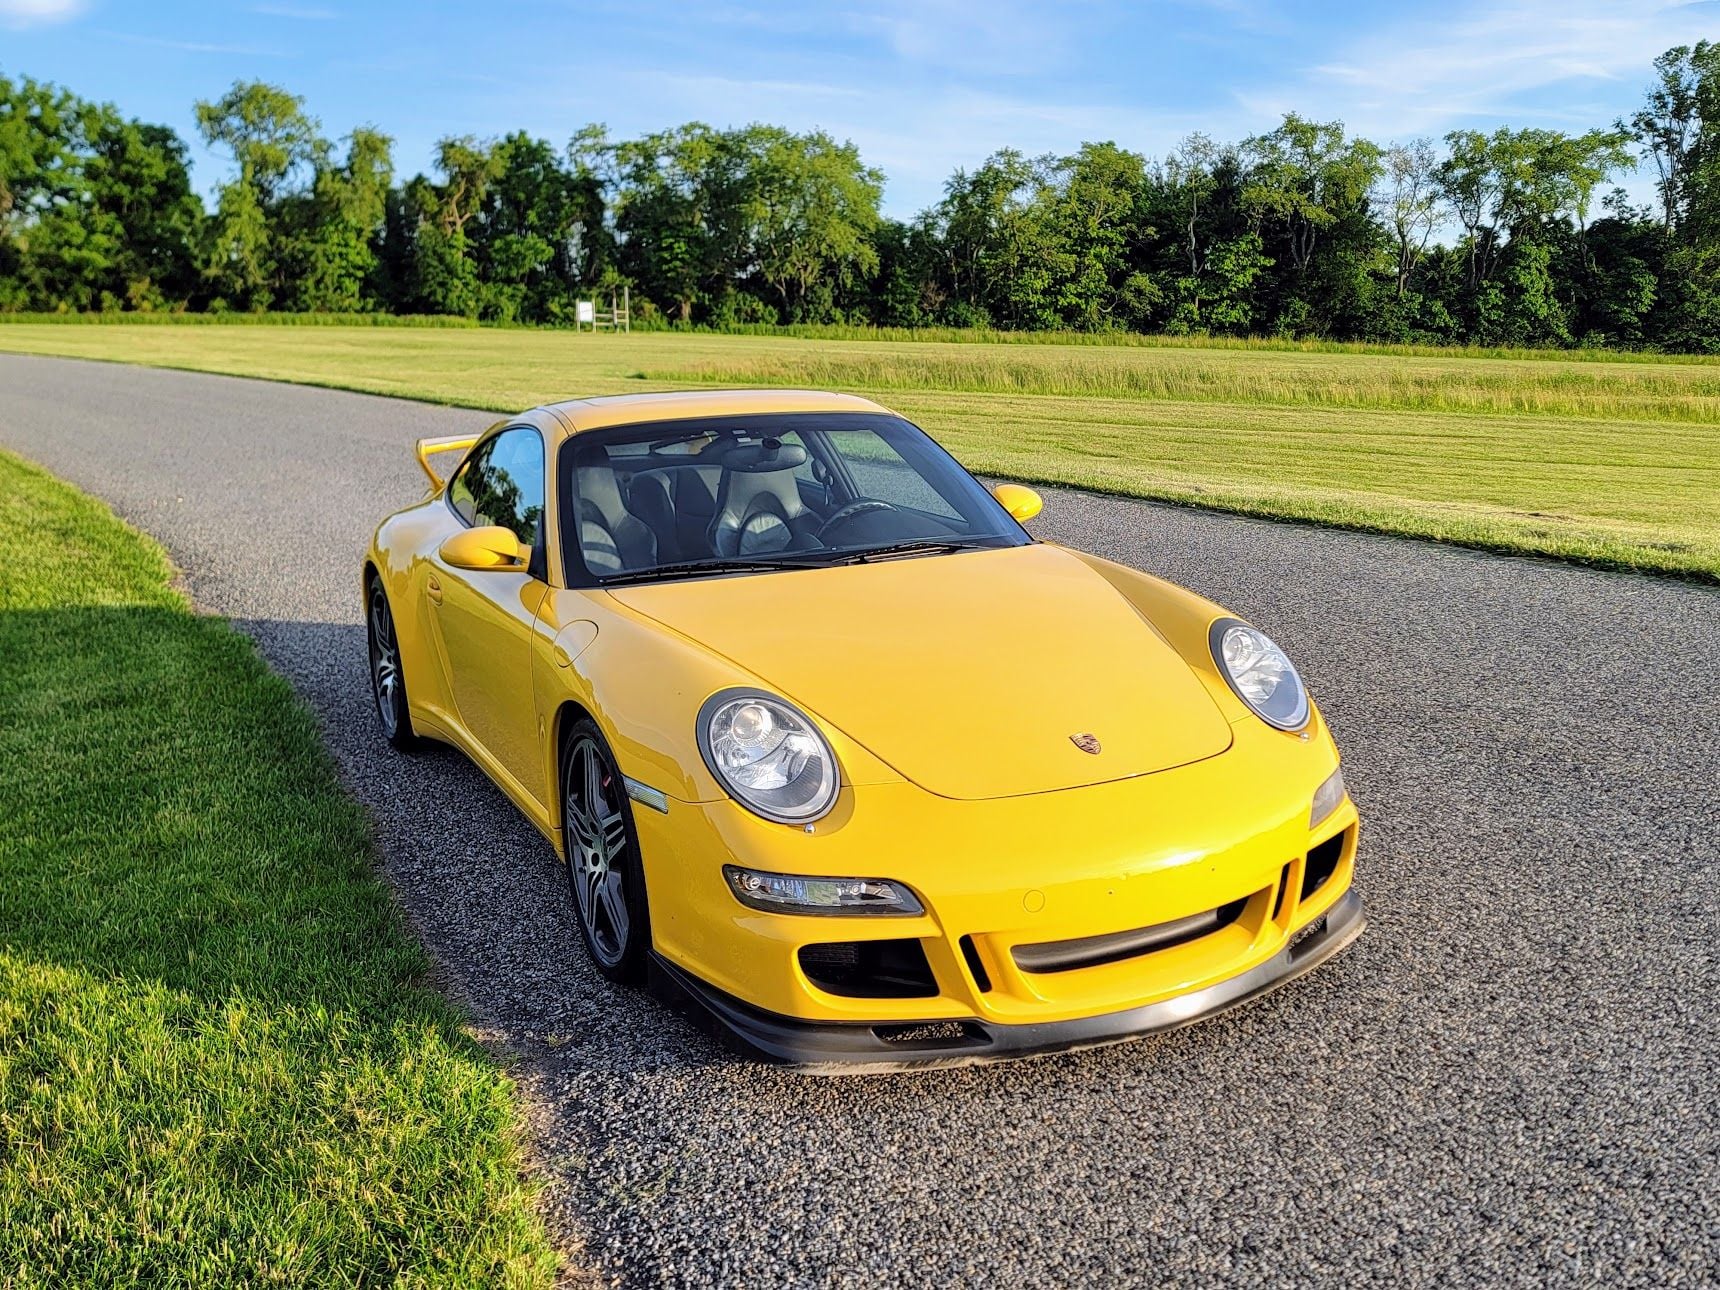 2007 Porsche 911 - 2007 911 C4S Speed Yellow with Factory Aerokit 6-speed - Used - Whitehouse Station, NJ 8889, United States